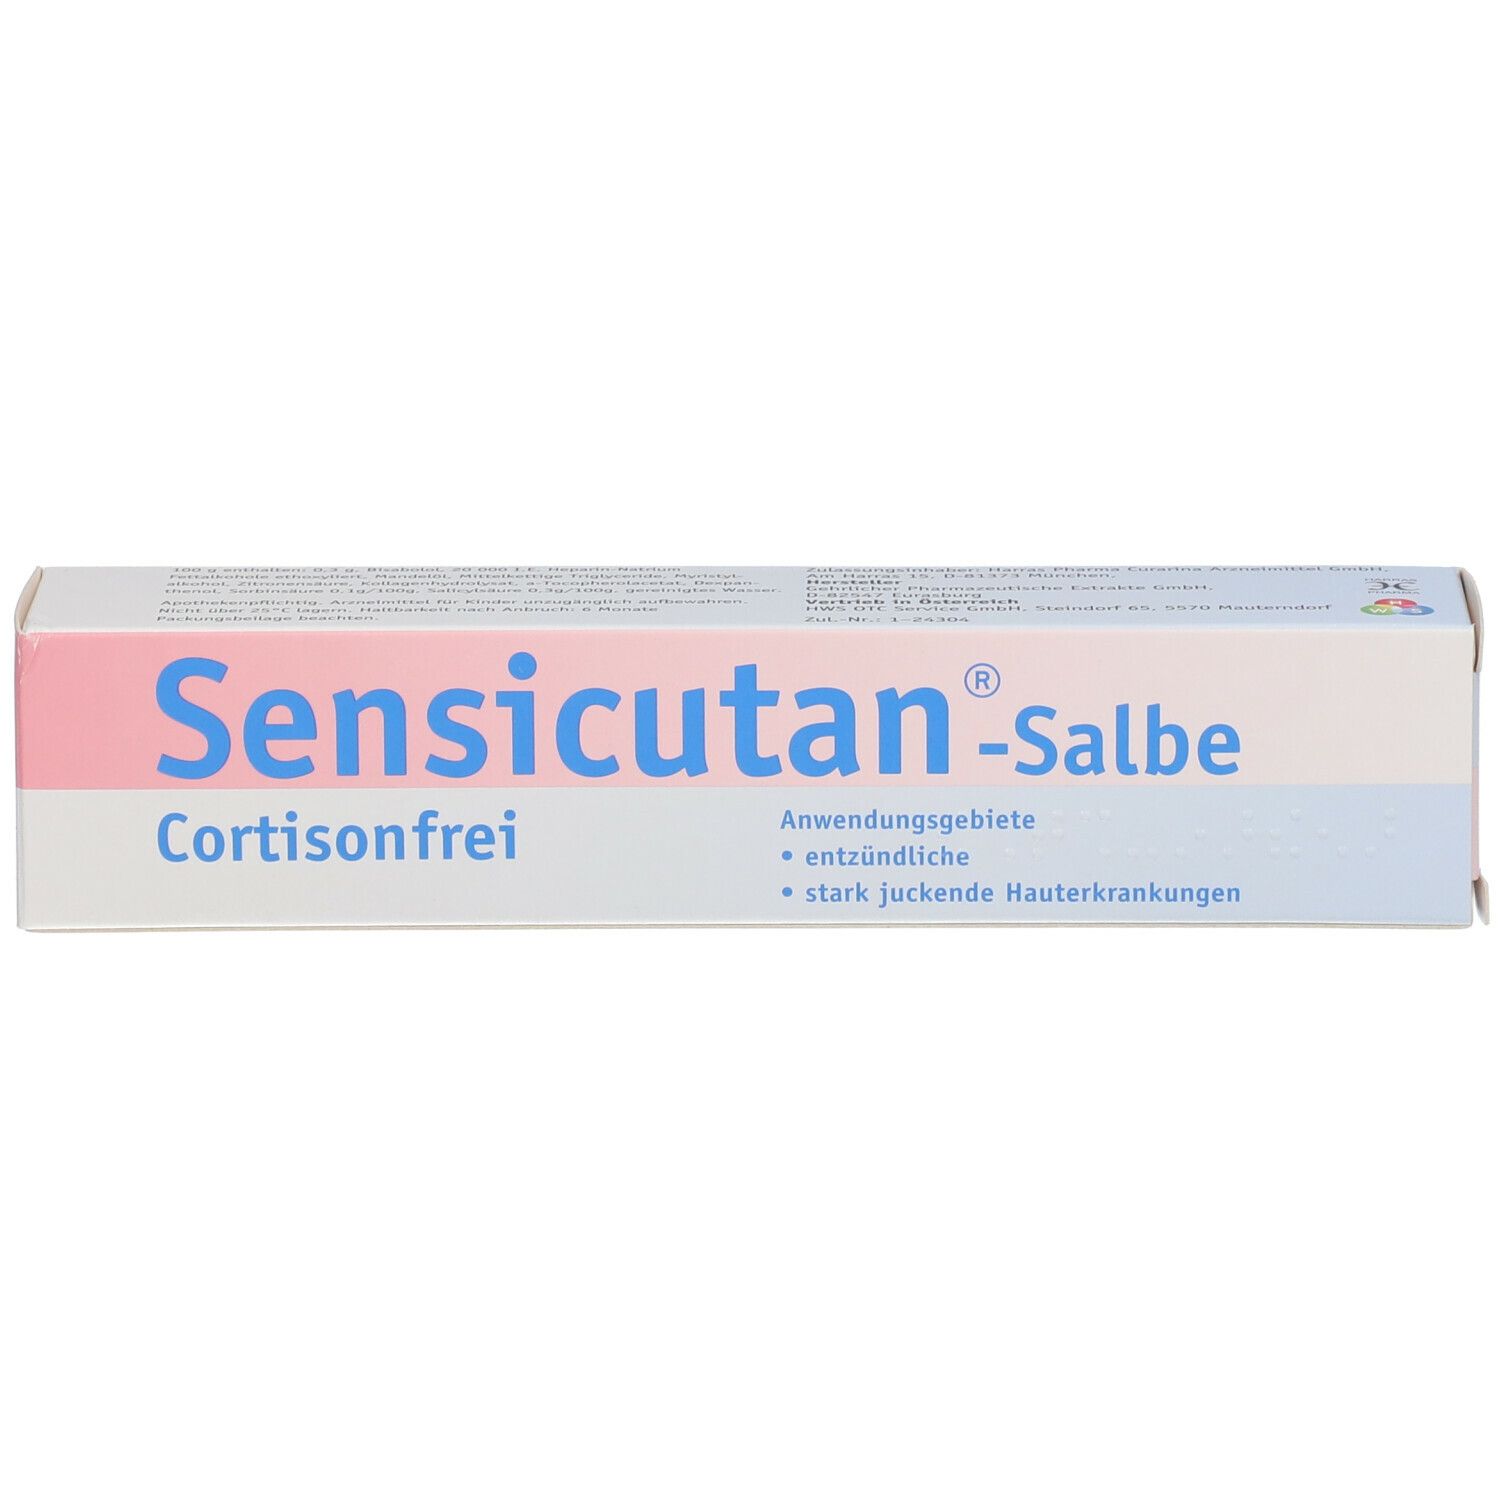 Sensicutan® Salbe